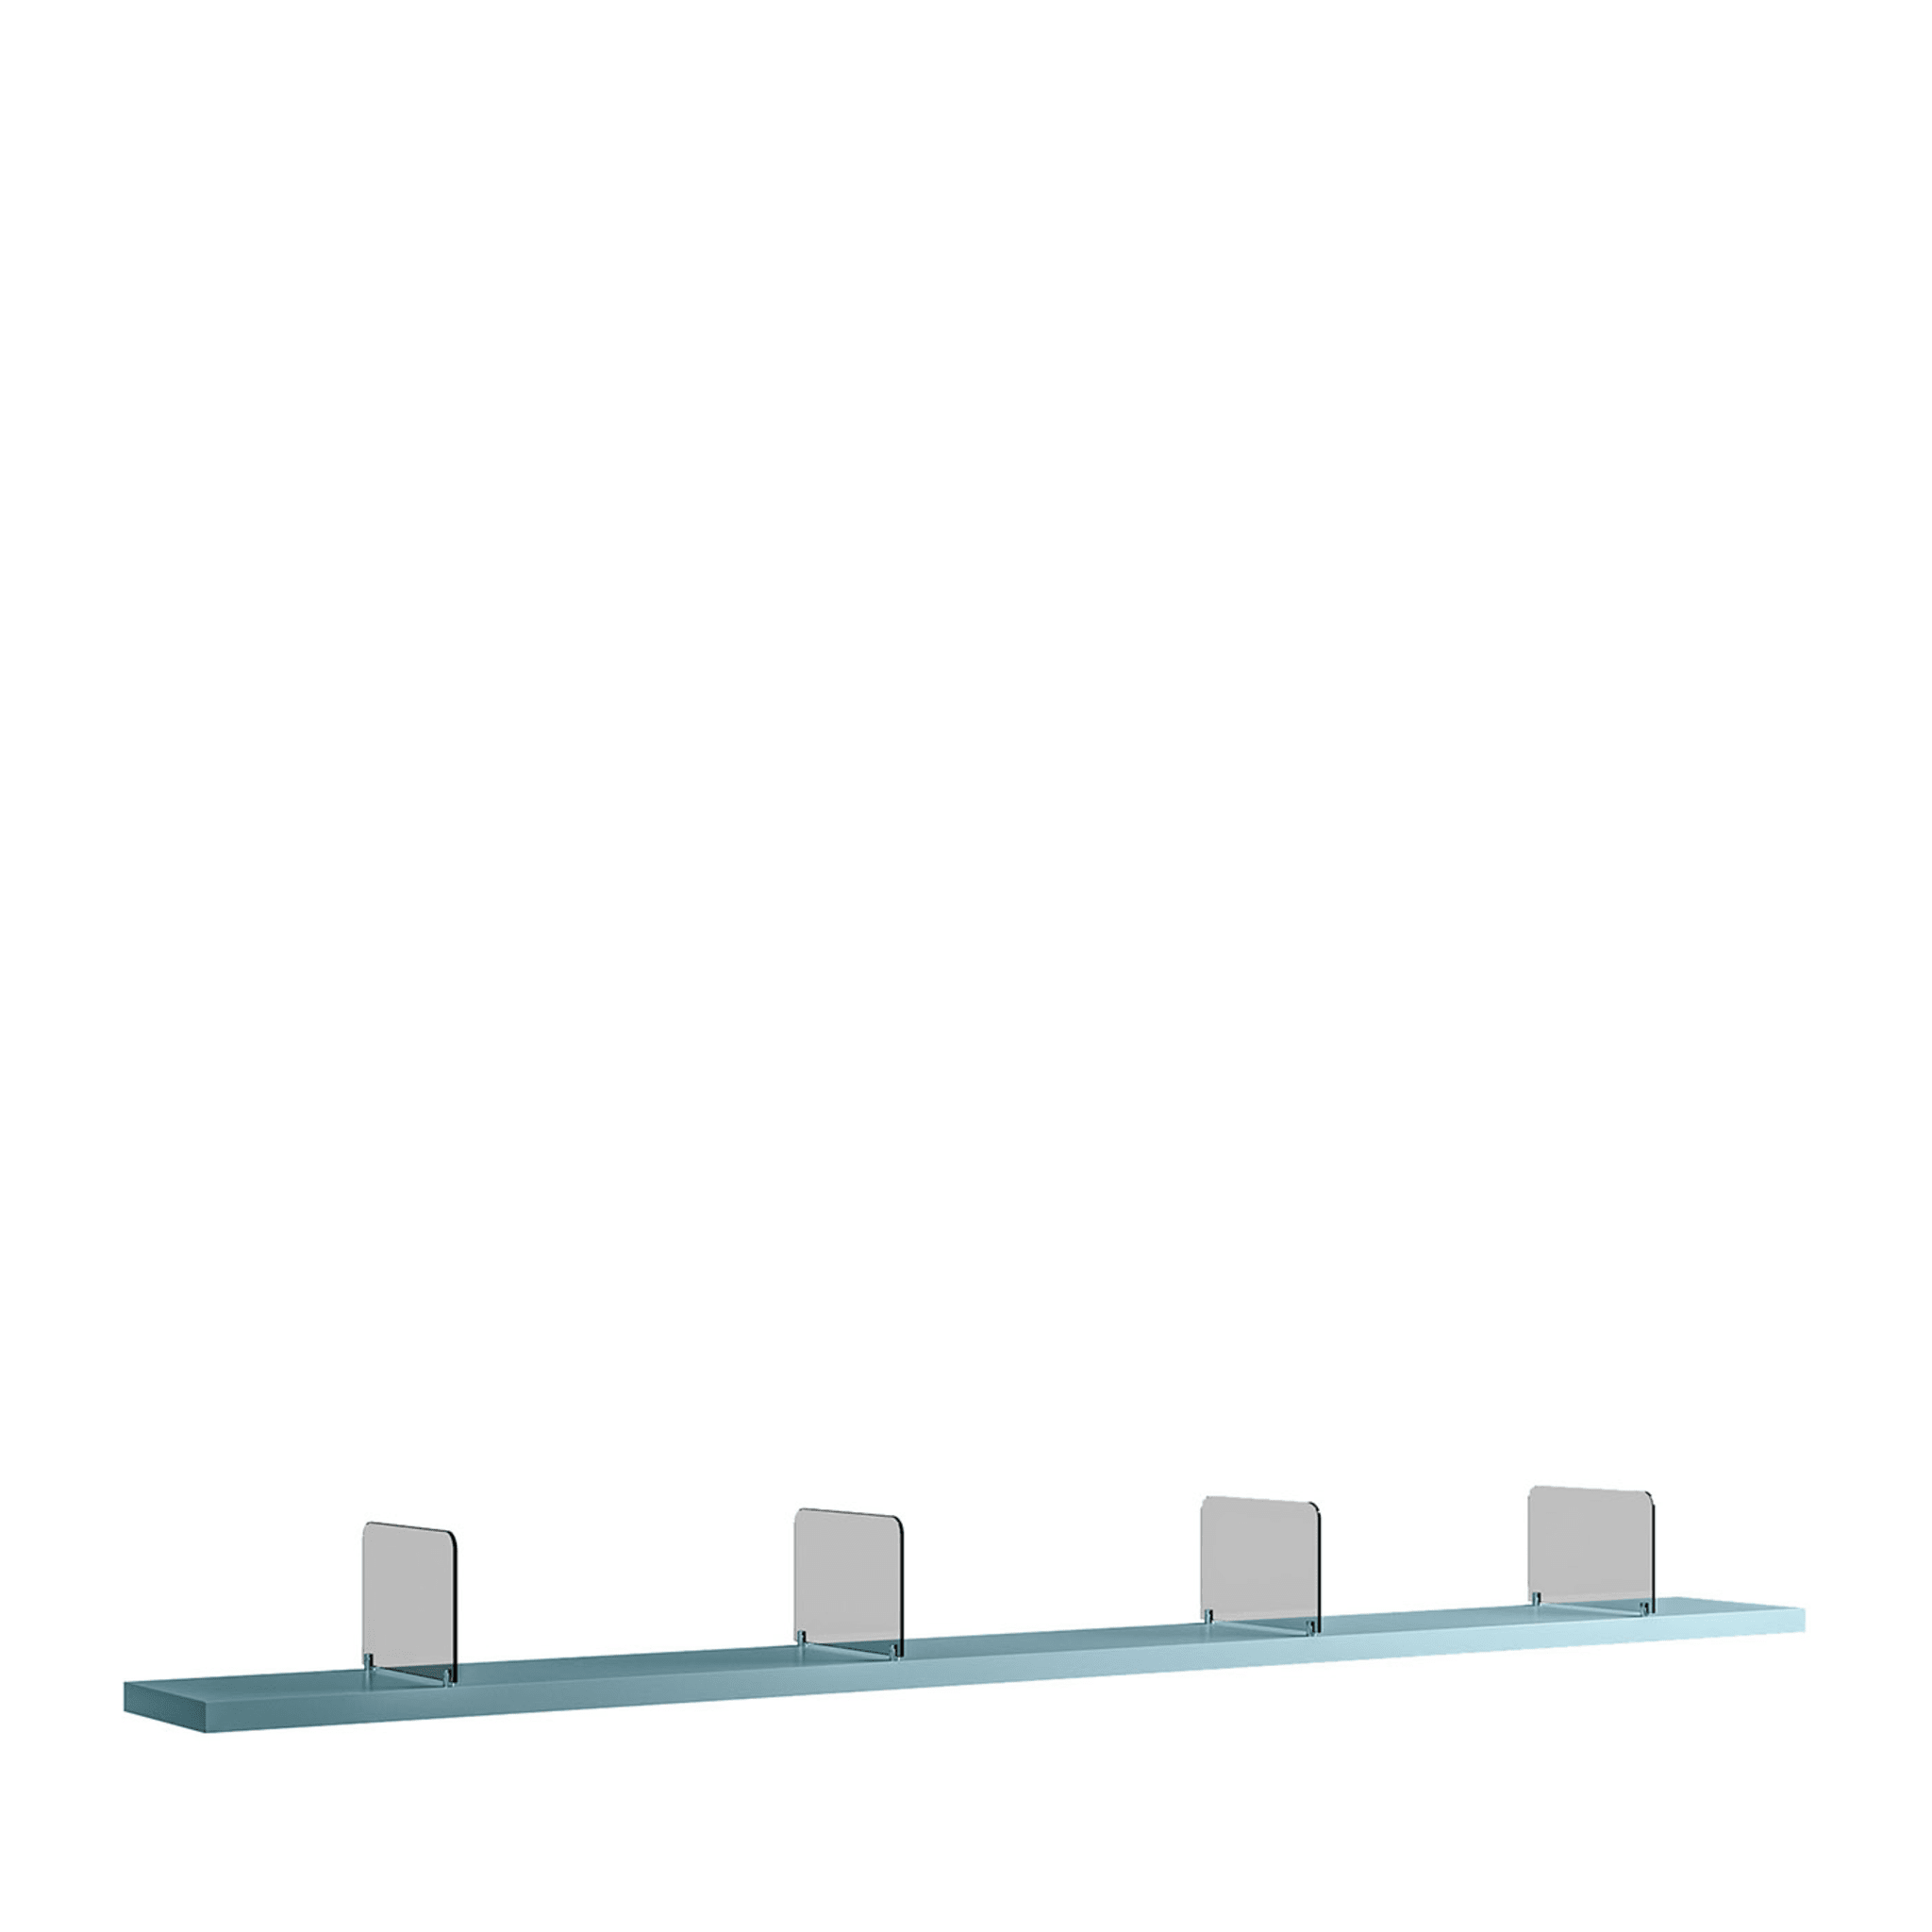 Piattaforma oceanica #3 - Vista principale